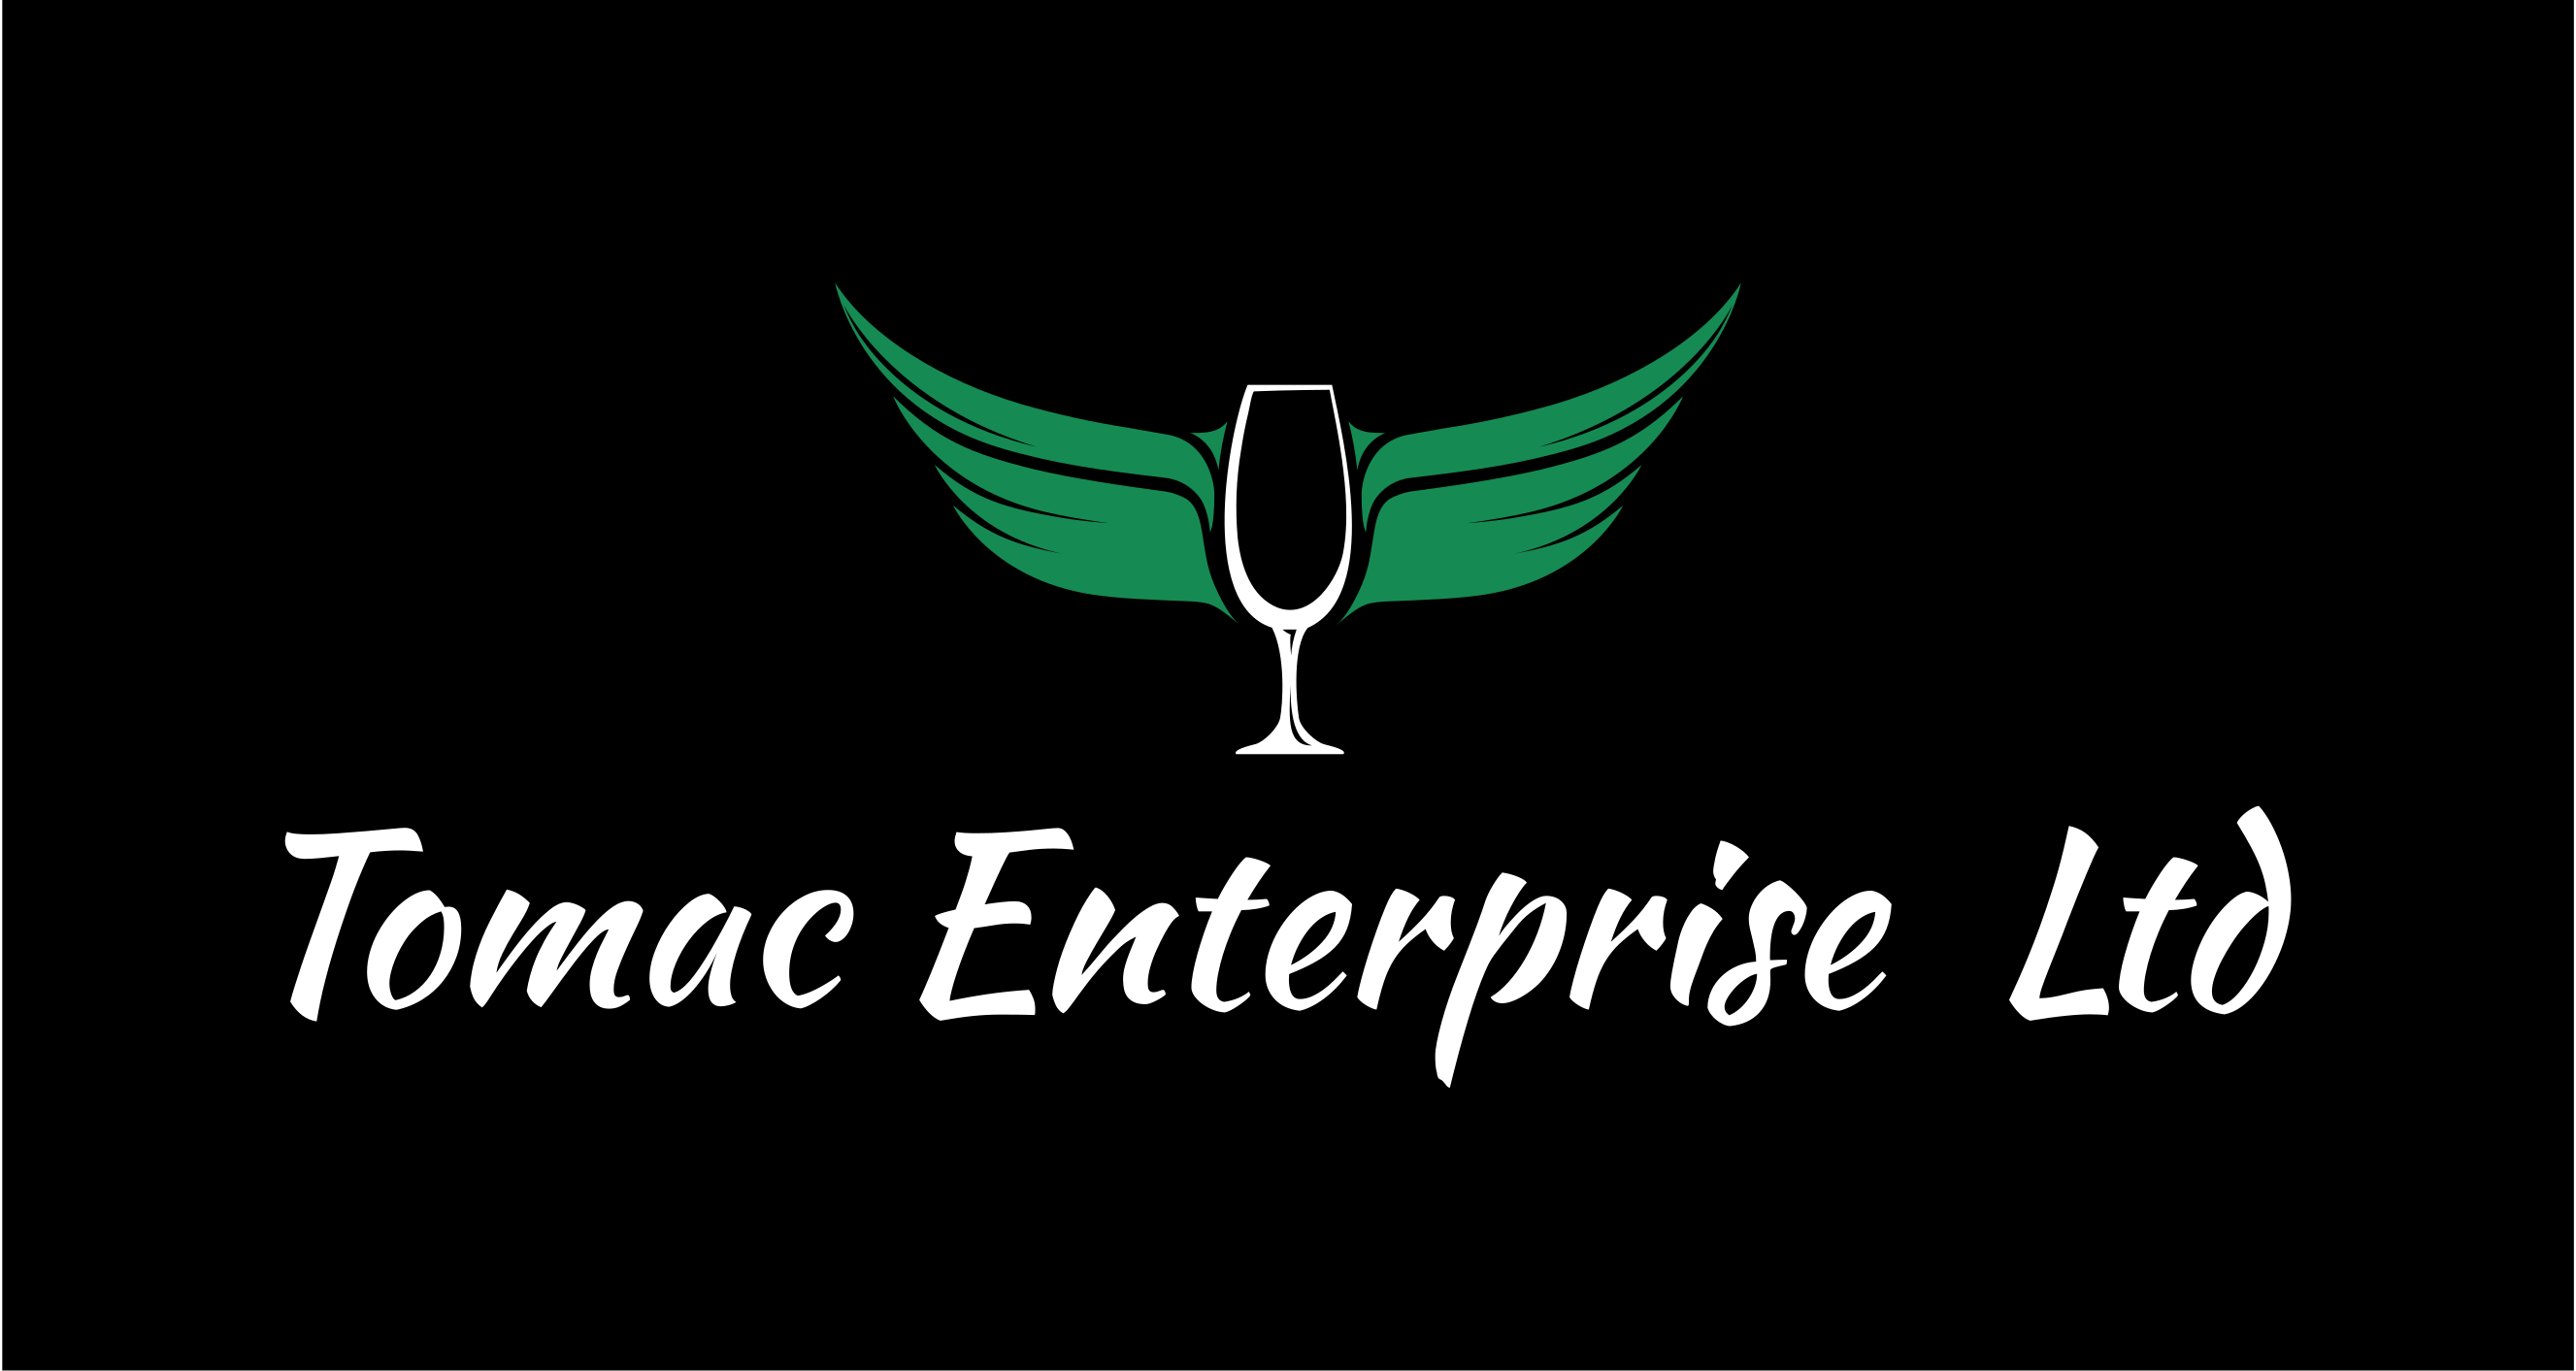 Tomac Enterprise Limited